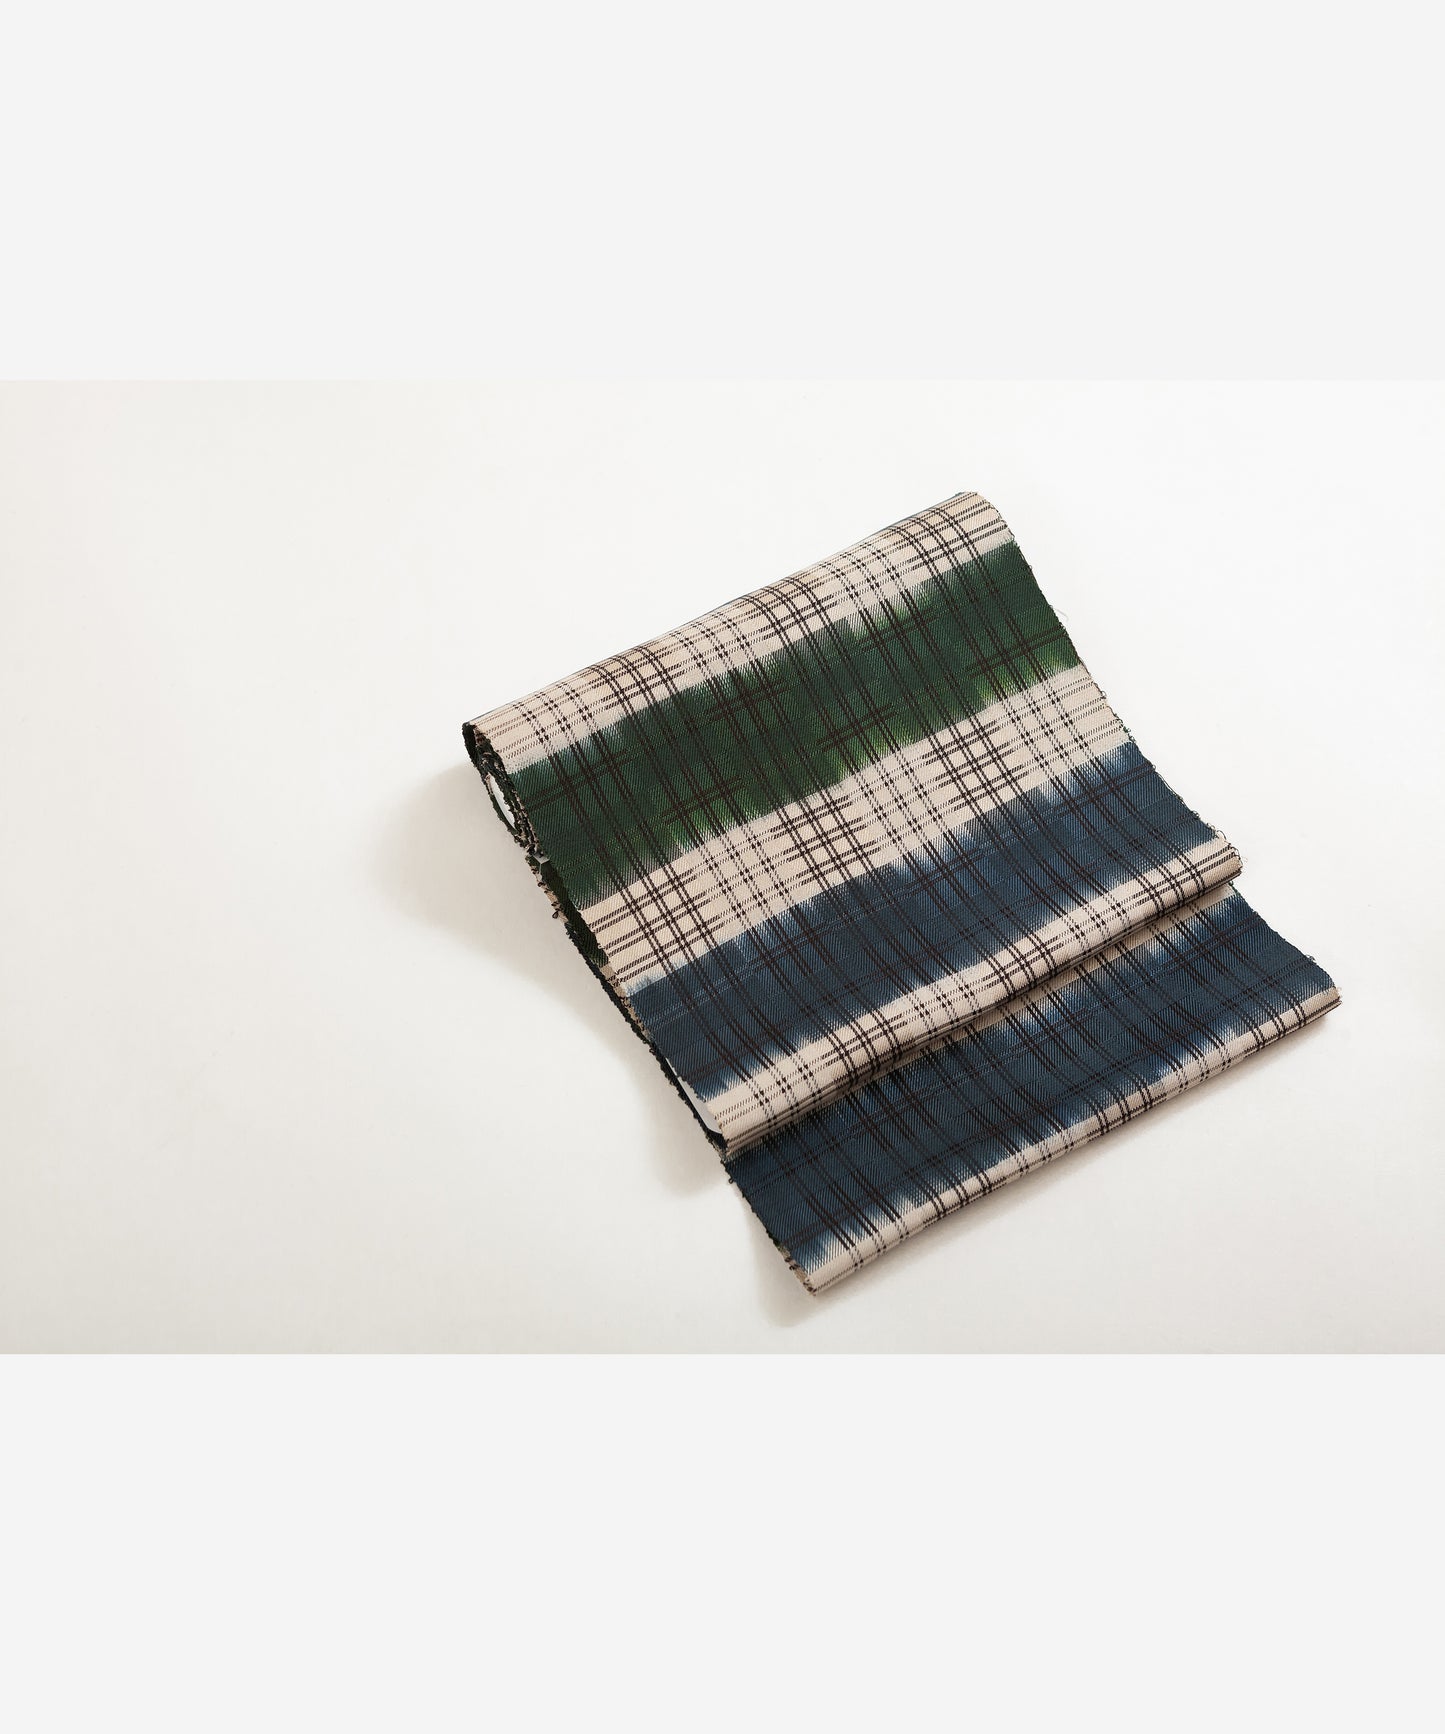 Twill dyed 9-inch Nagoya obi “Indigo and Green” Shinya Yanagi